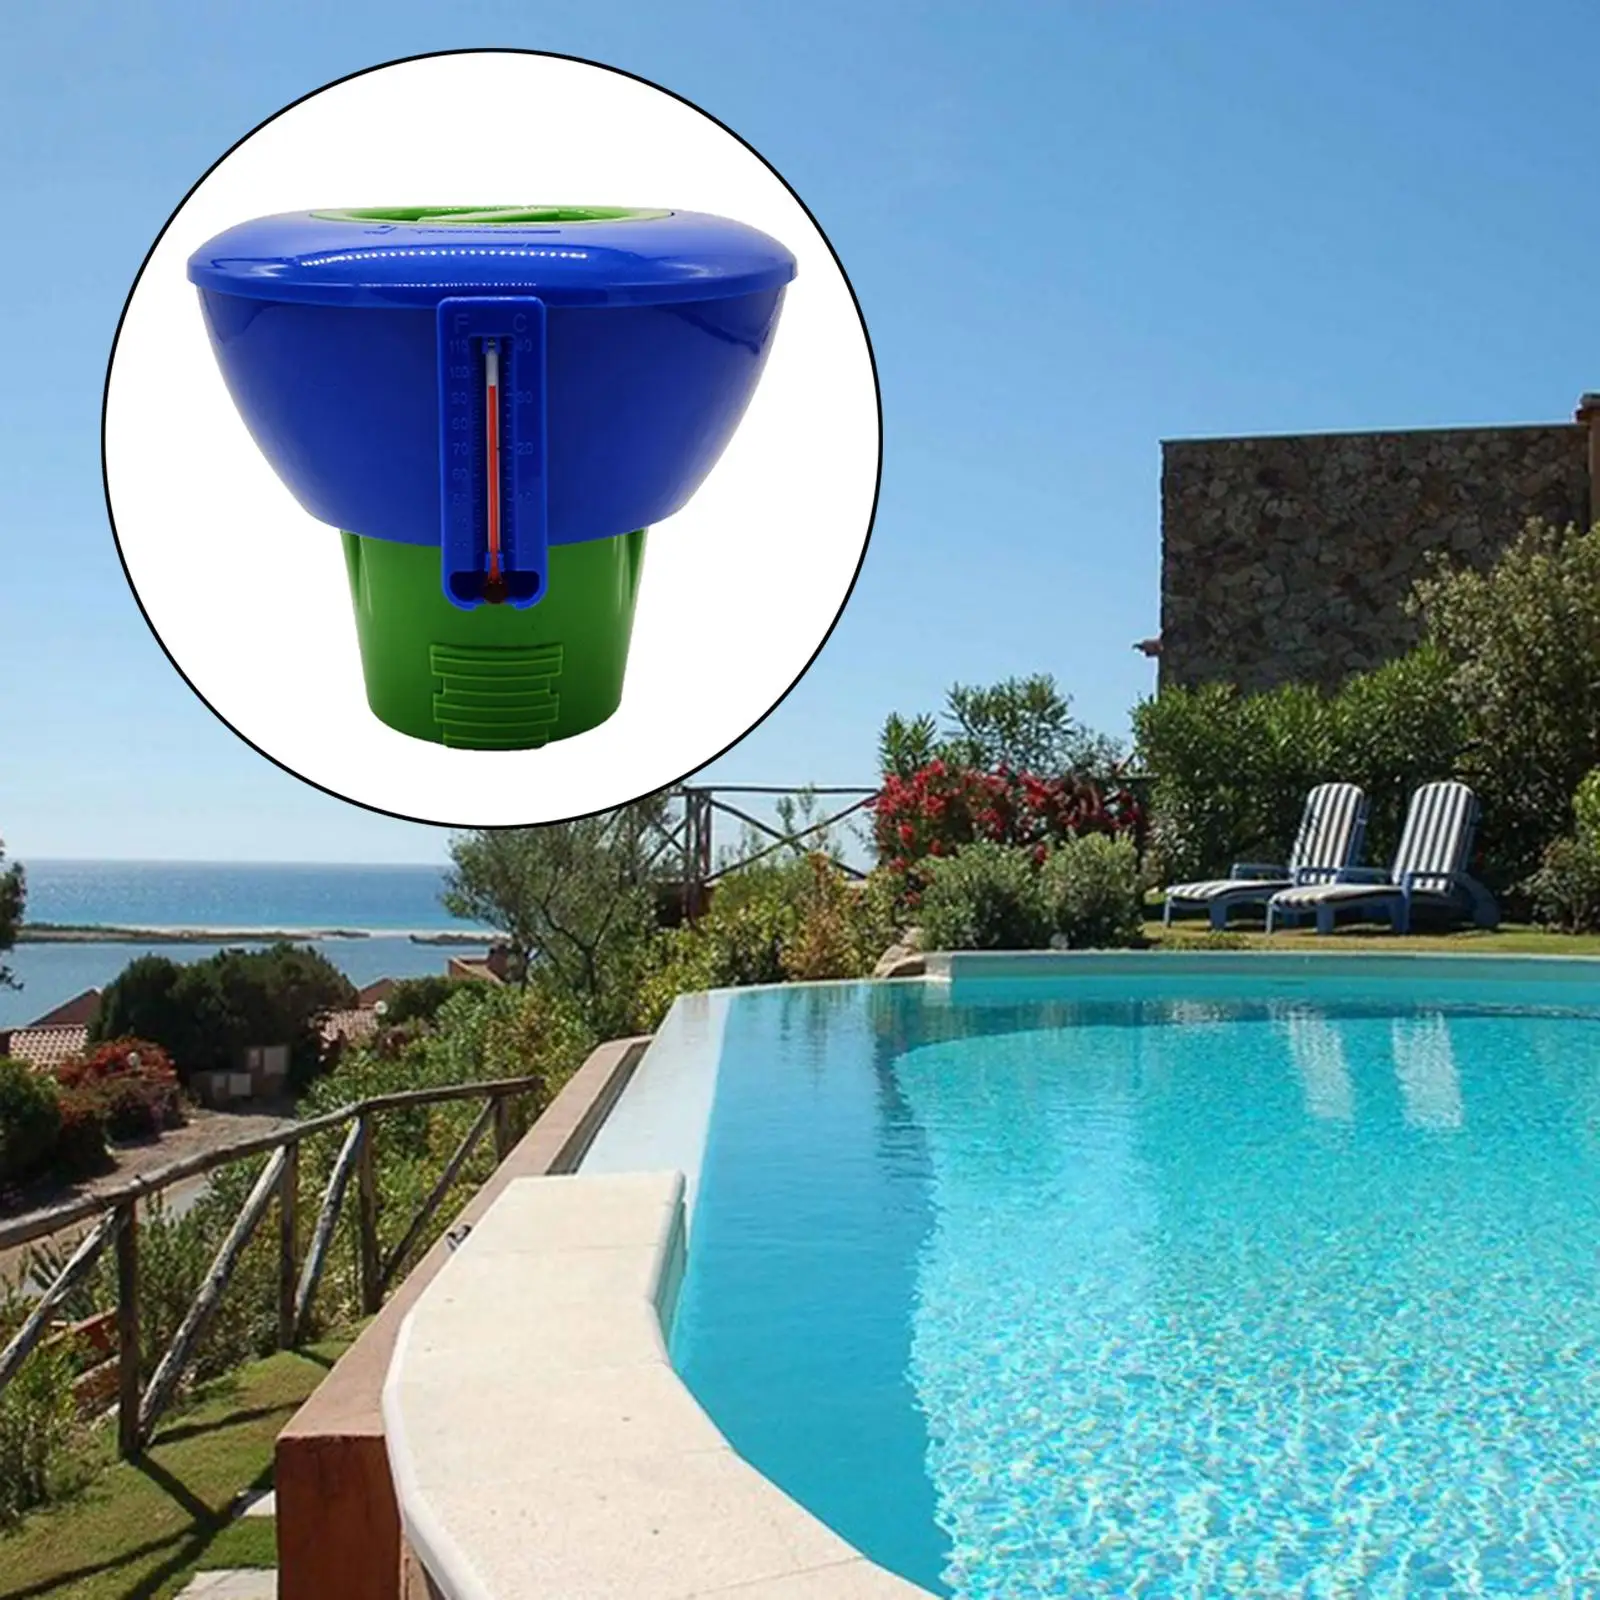 Pool  Dispenser with , Strong Floating Chlorine Dispenser for Swimming Pools, 7inch Tablet Holder